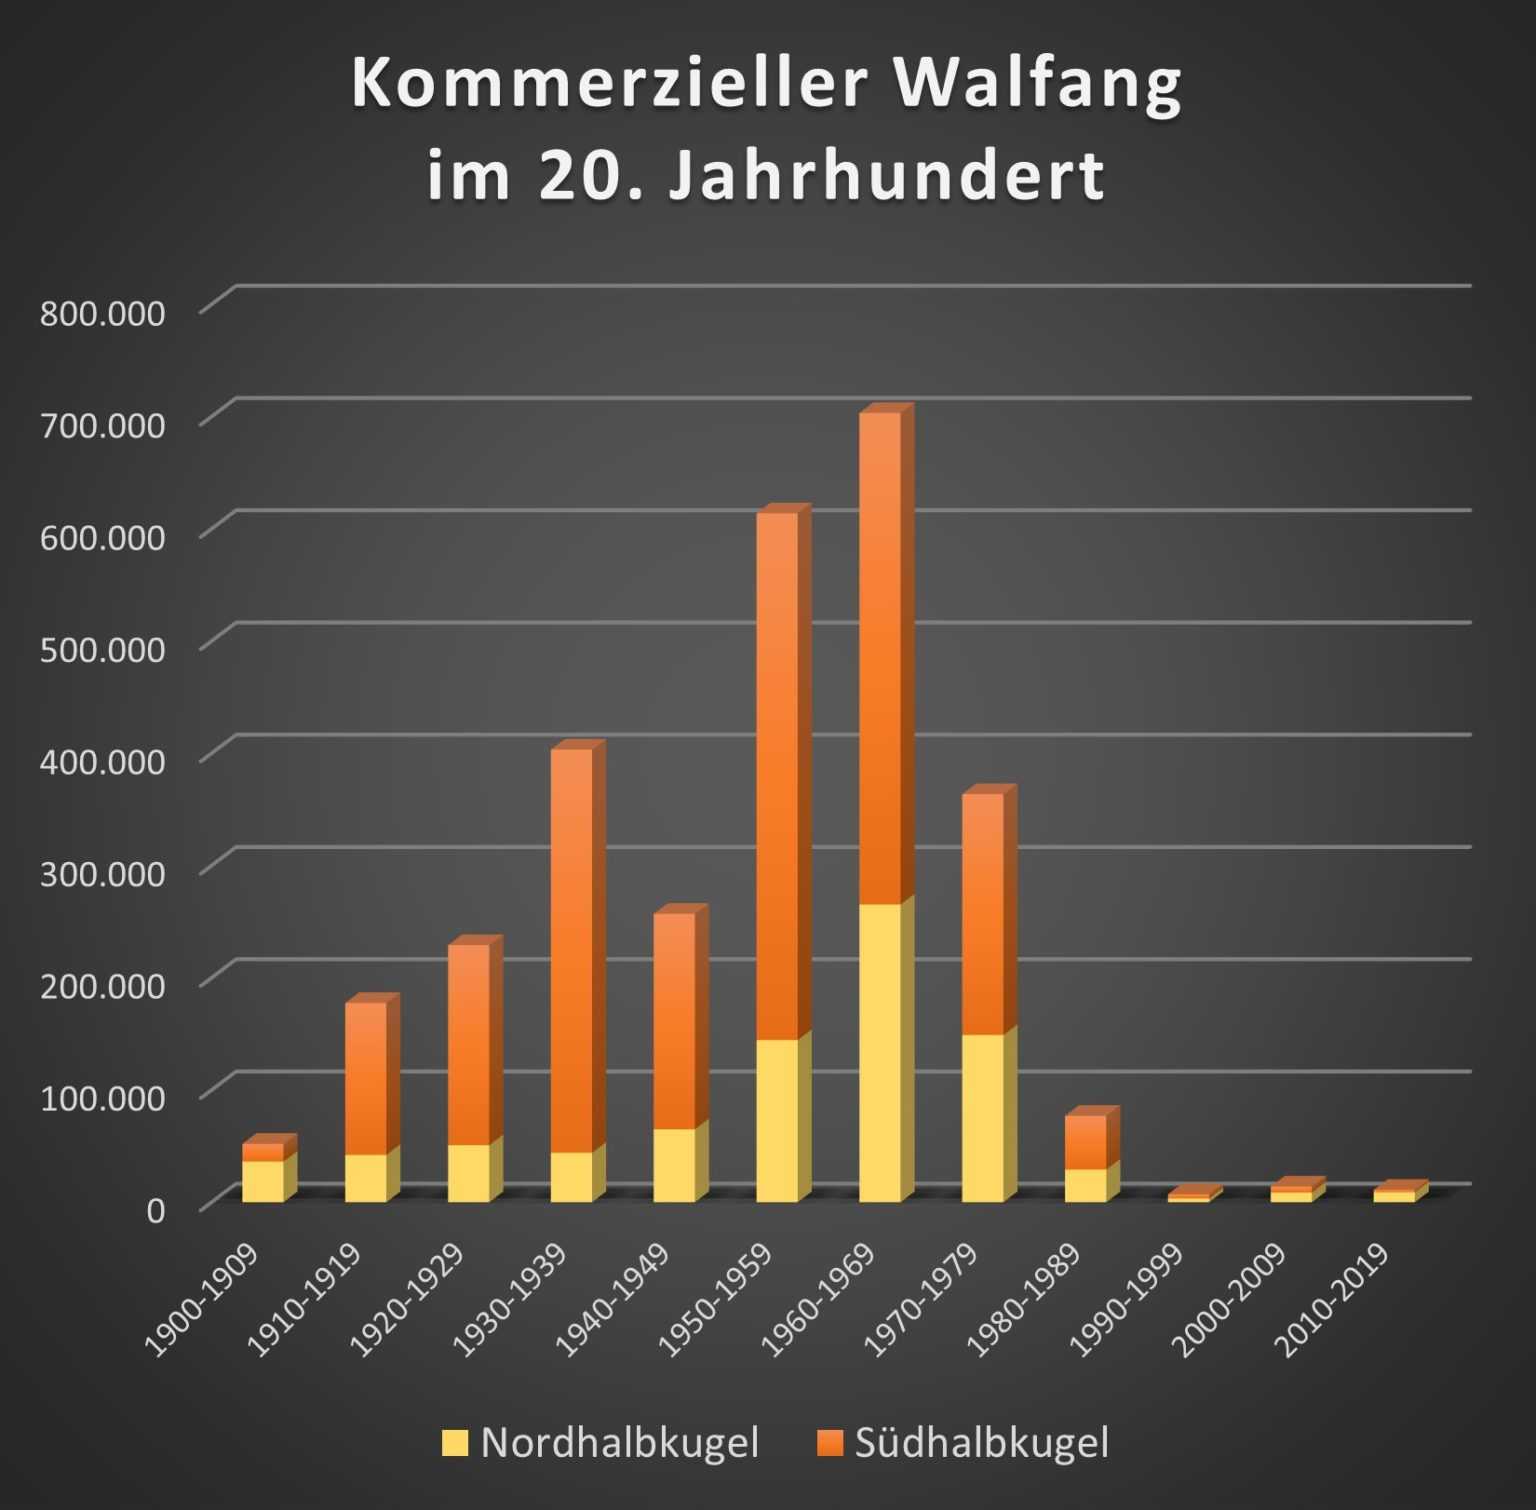 Industrieller Walfang seit 1900 (nach Rocha et al. 2014; Pro Wildlife)